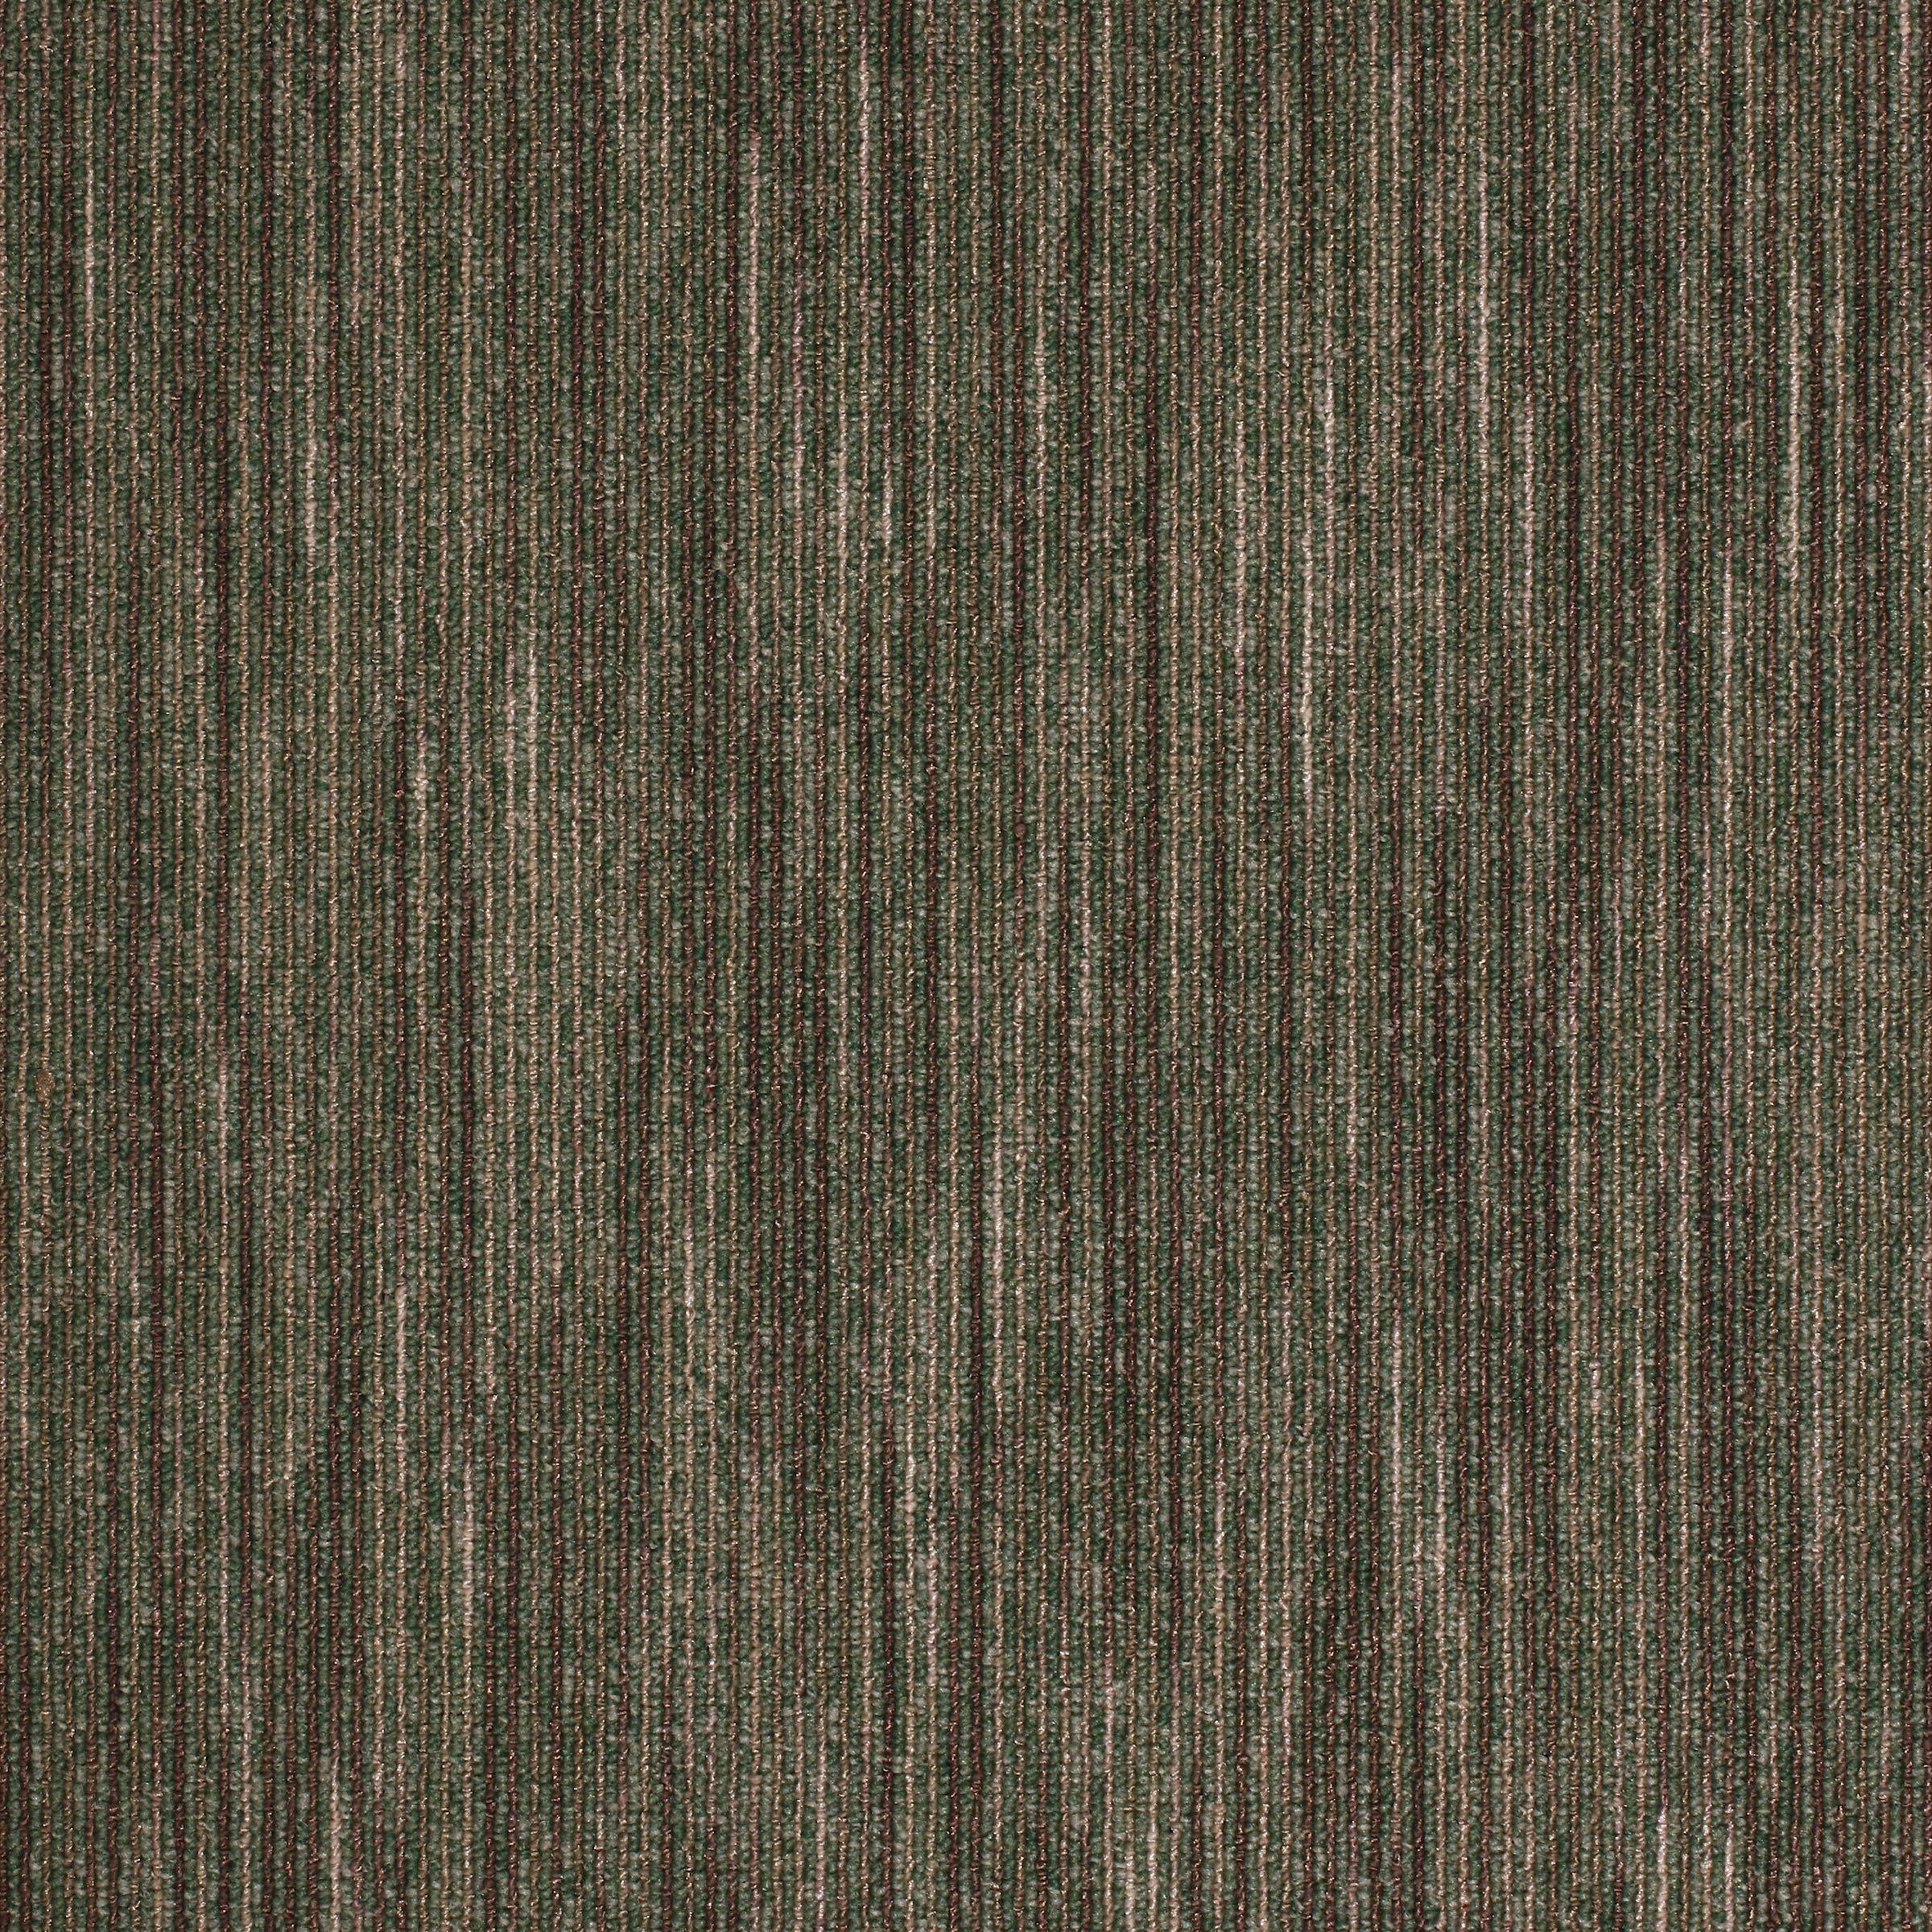 Paragon Workspace Linear Alber Green Carpet Tile